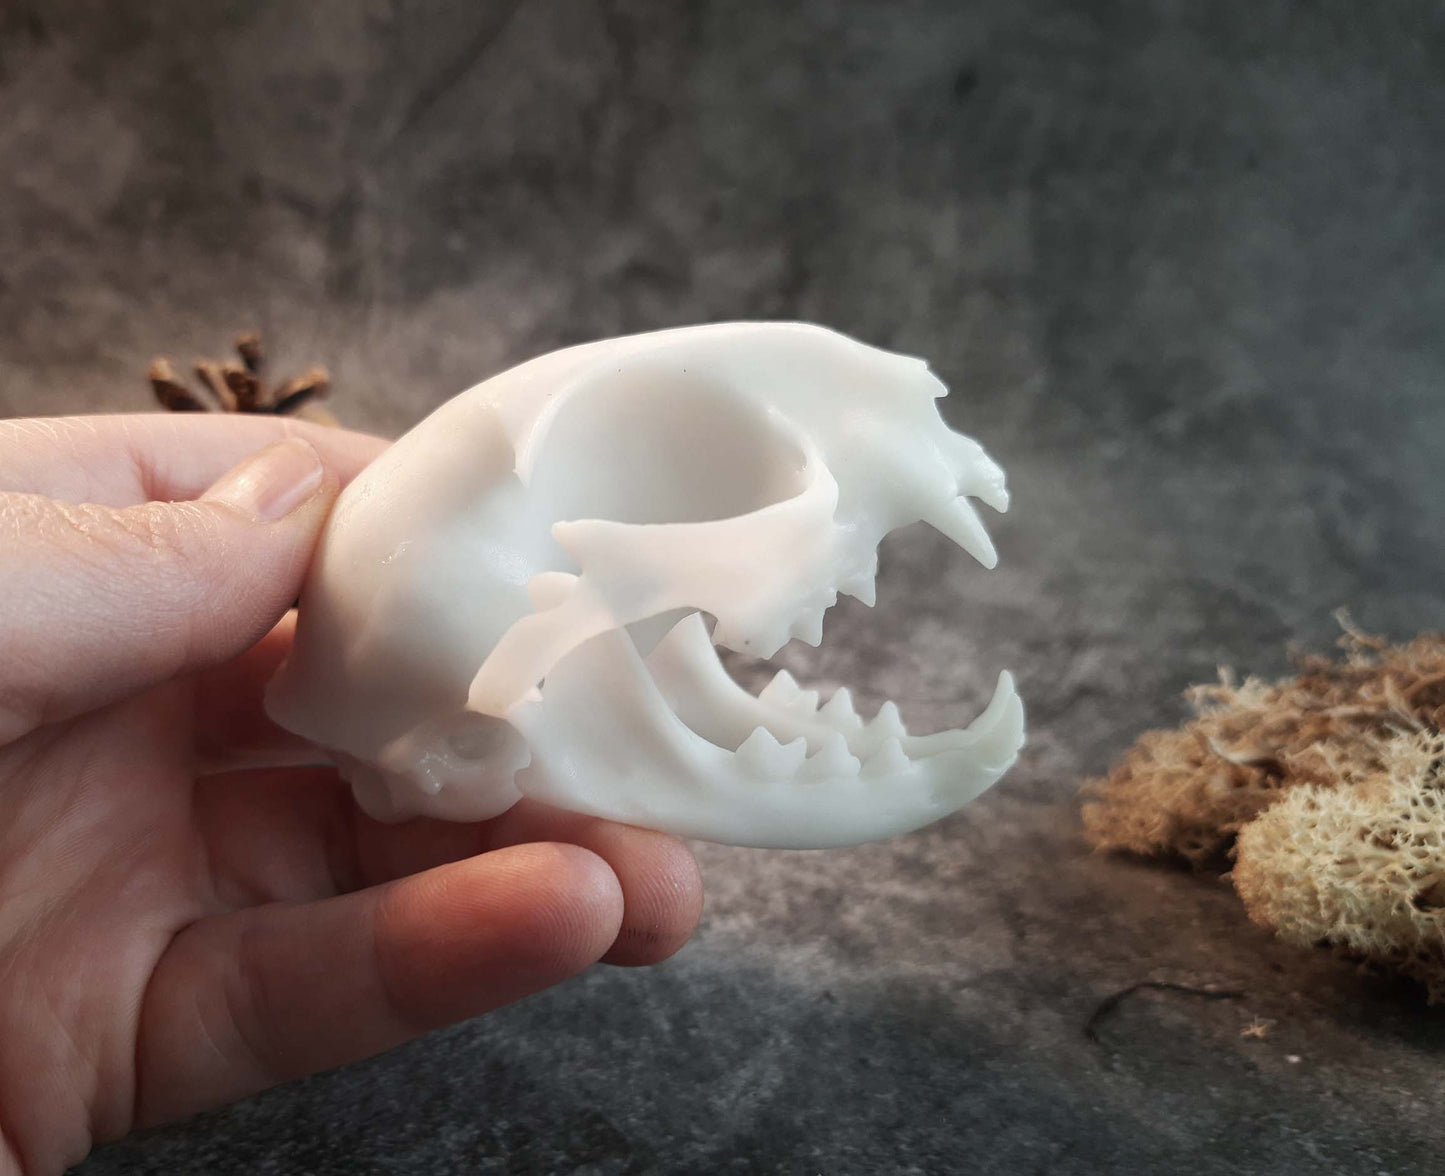 Cat skull replica white